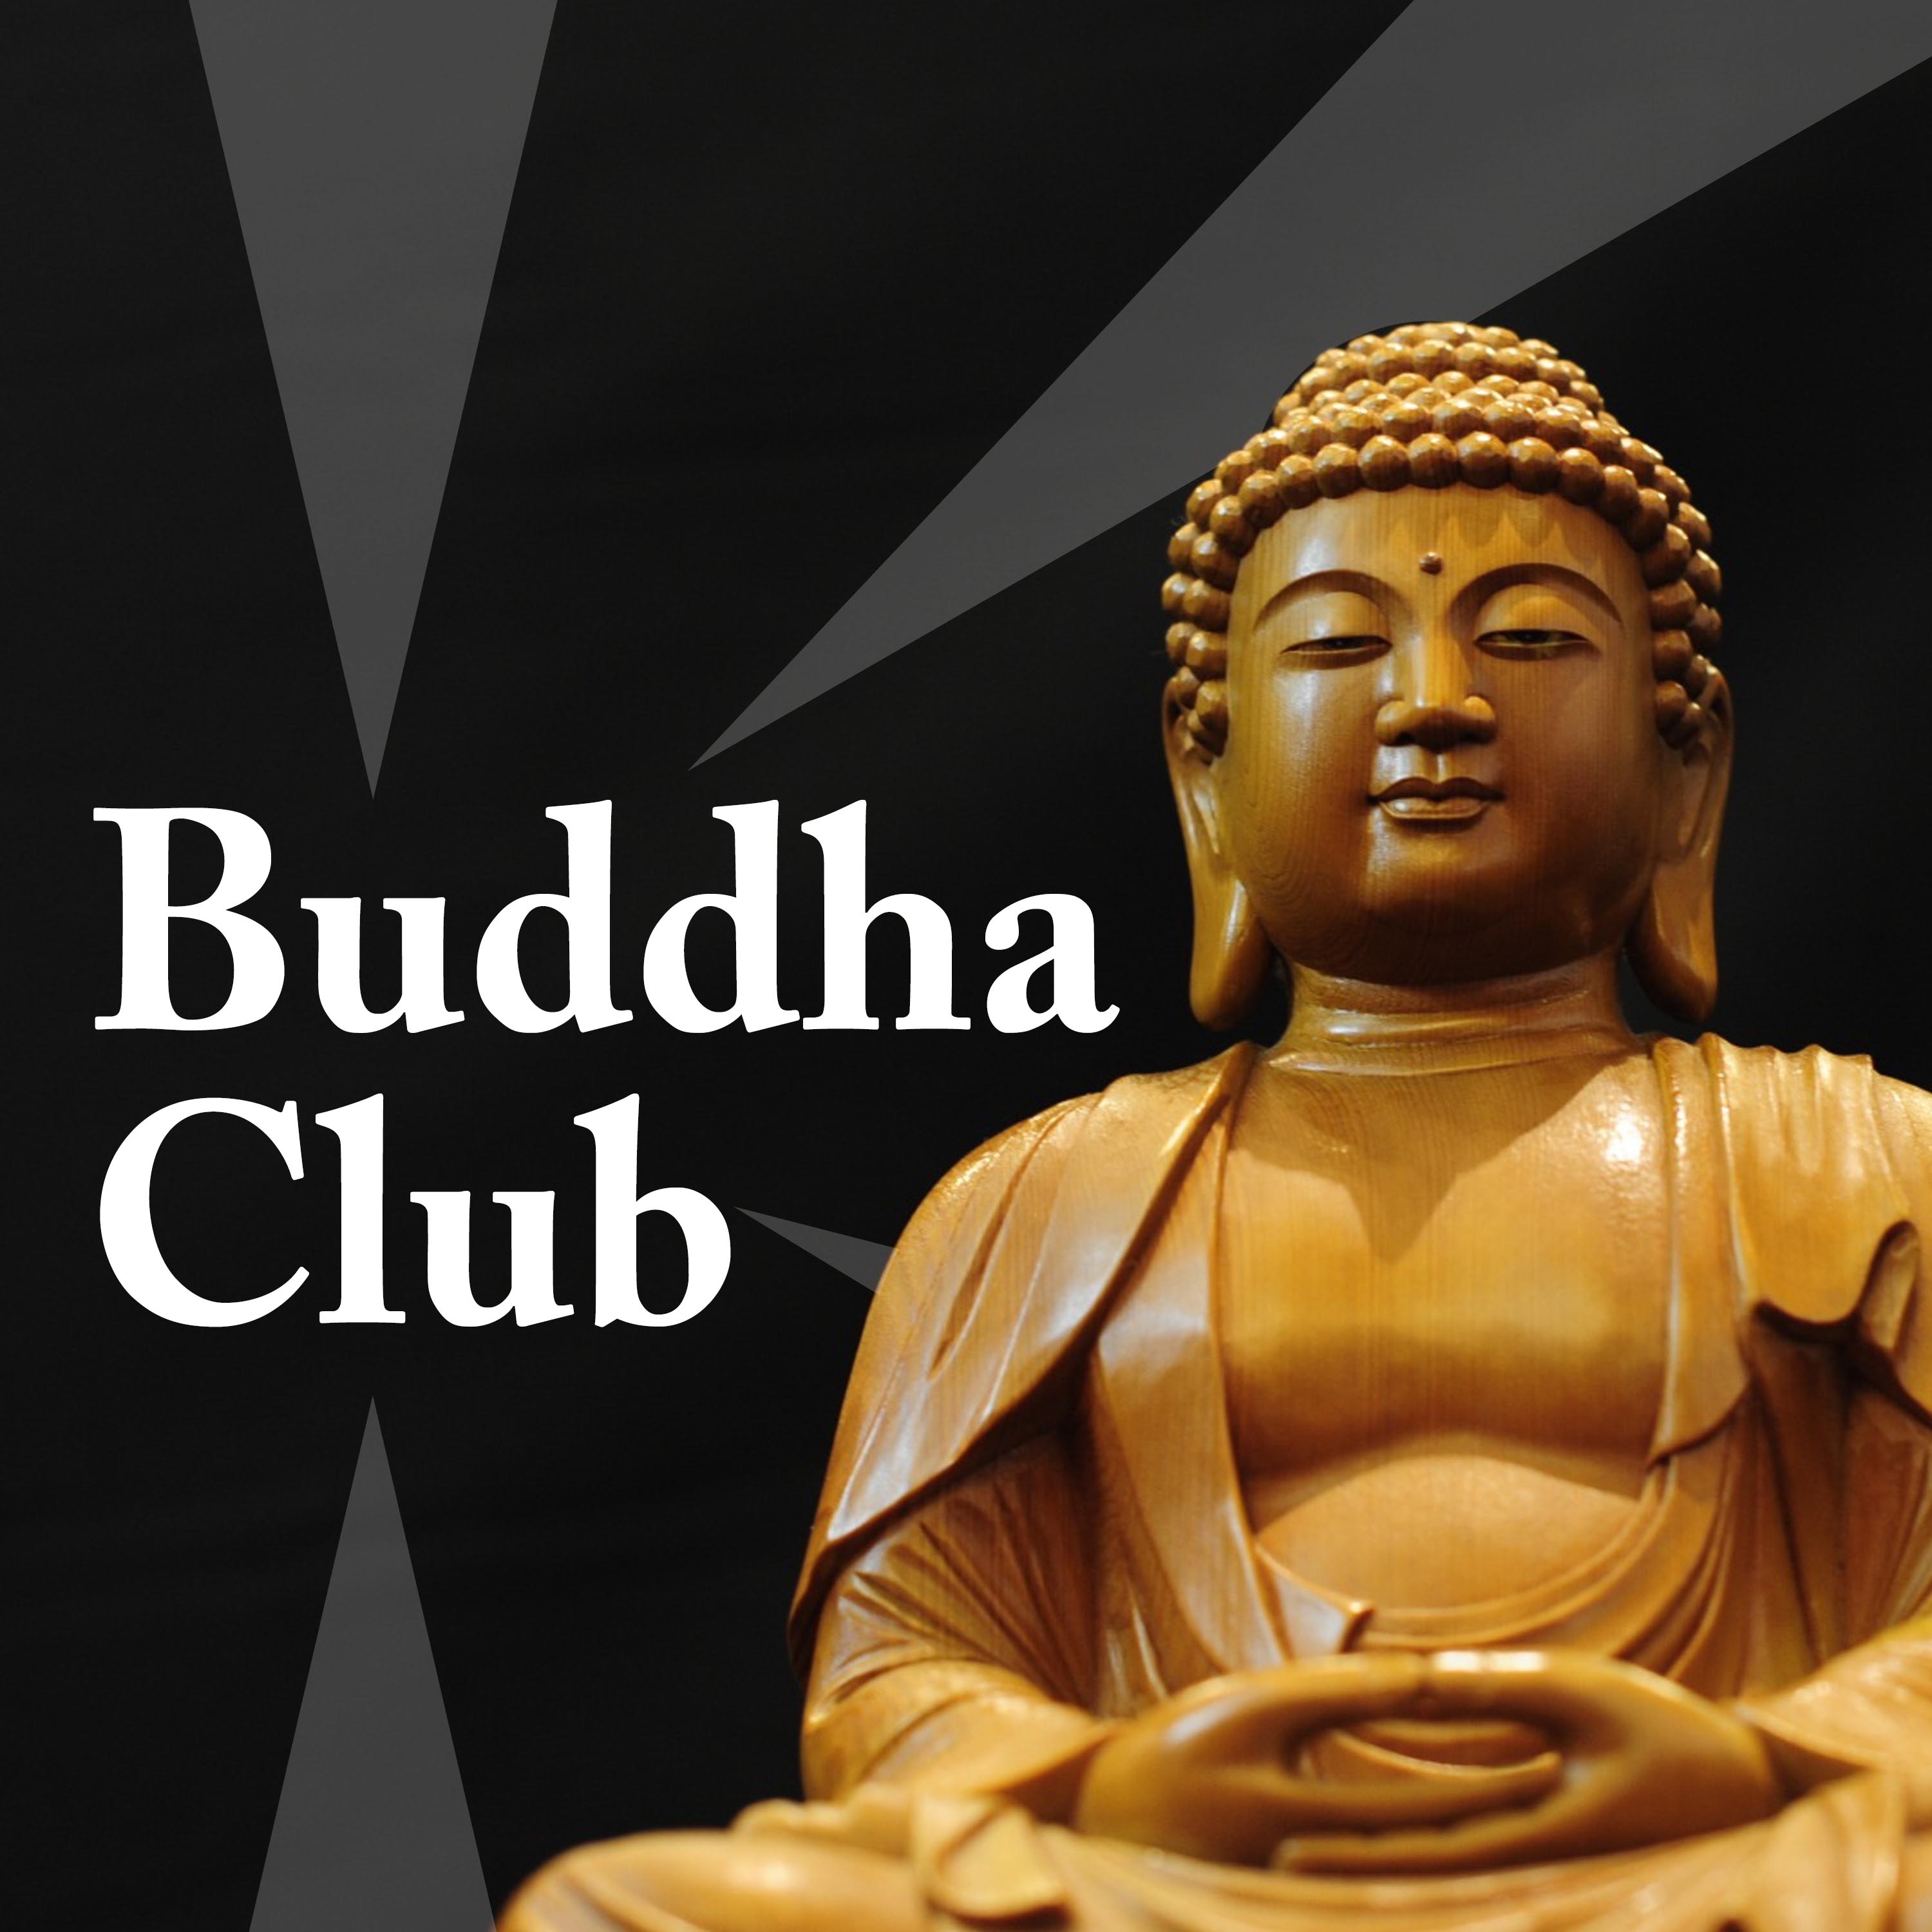 Buddha Club - Meditation Music, Instrumental Zen Music with Asian Songs